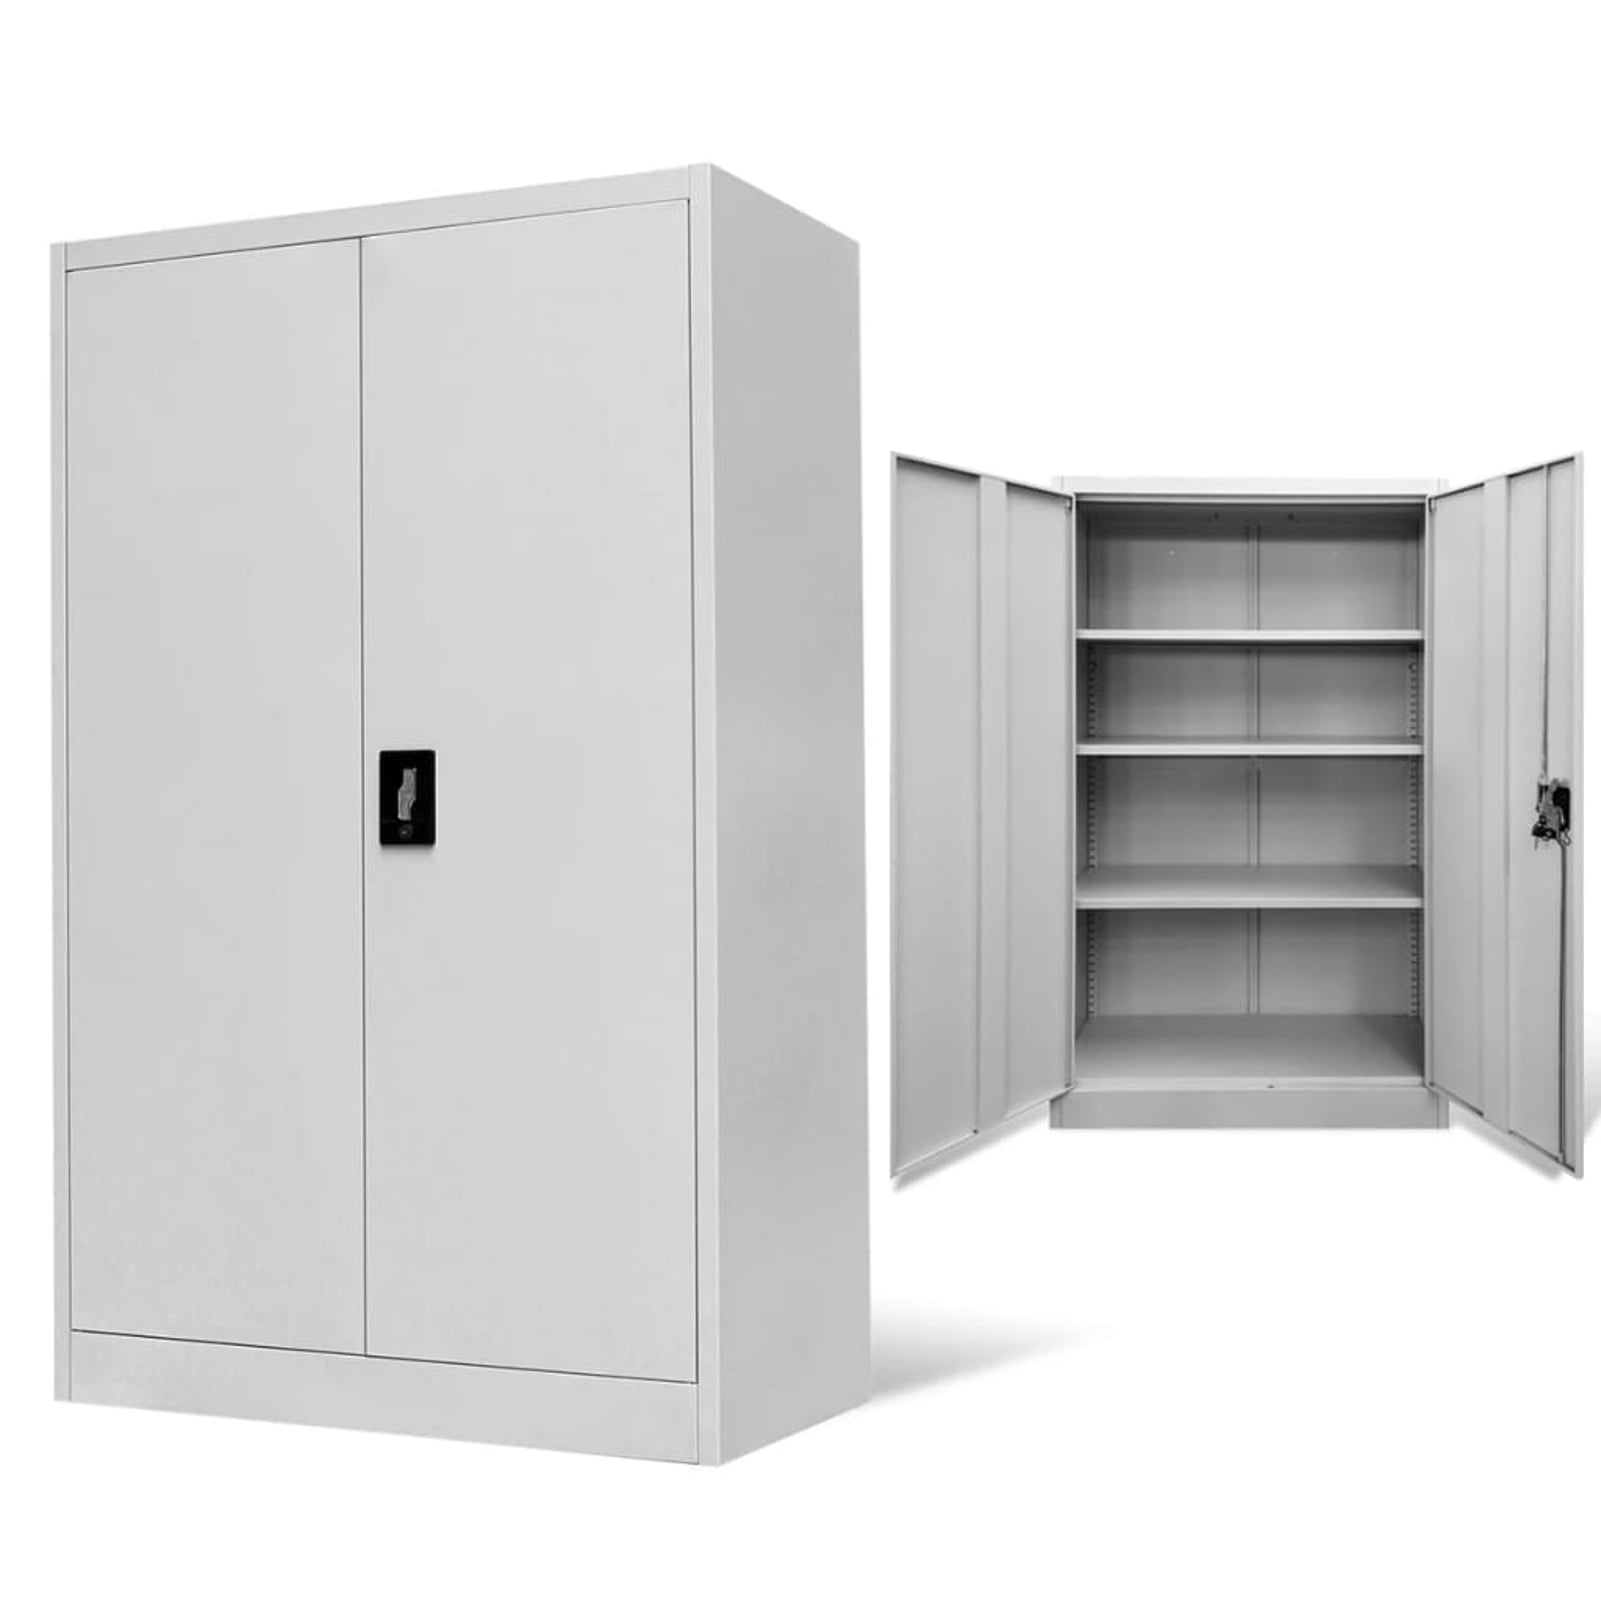 Details about   Metal Storage Office Cabinet 2/4 Door Cupboard Wardrobe Shelves Locker Steel US 